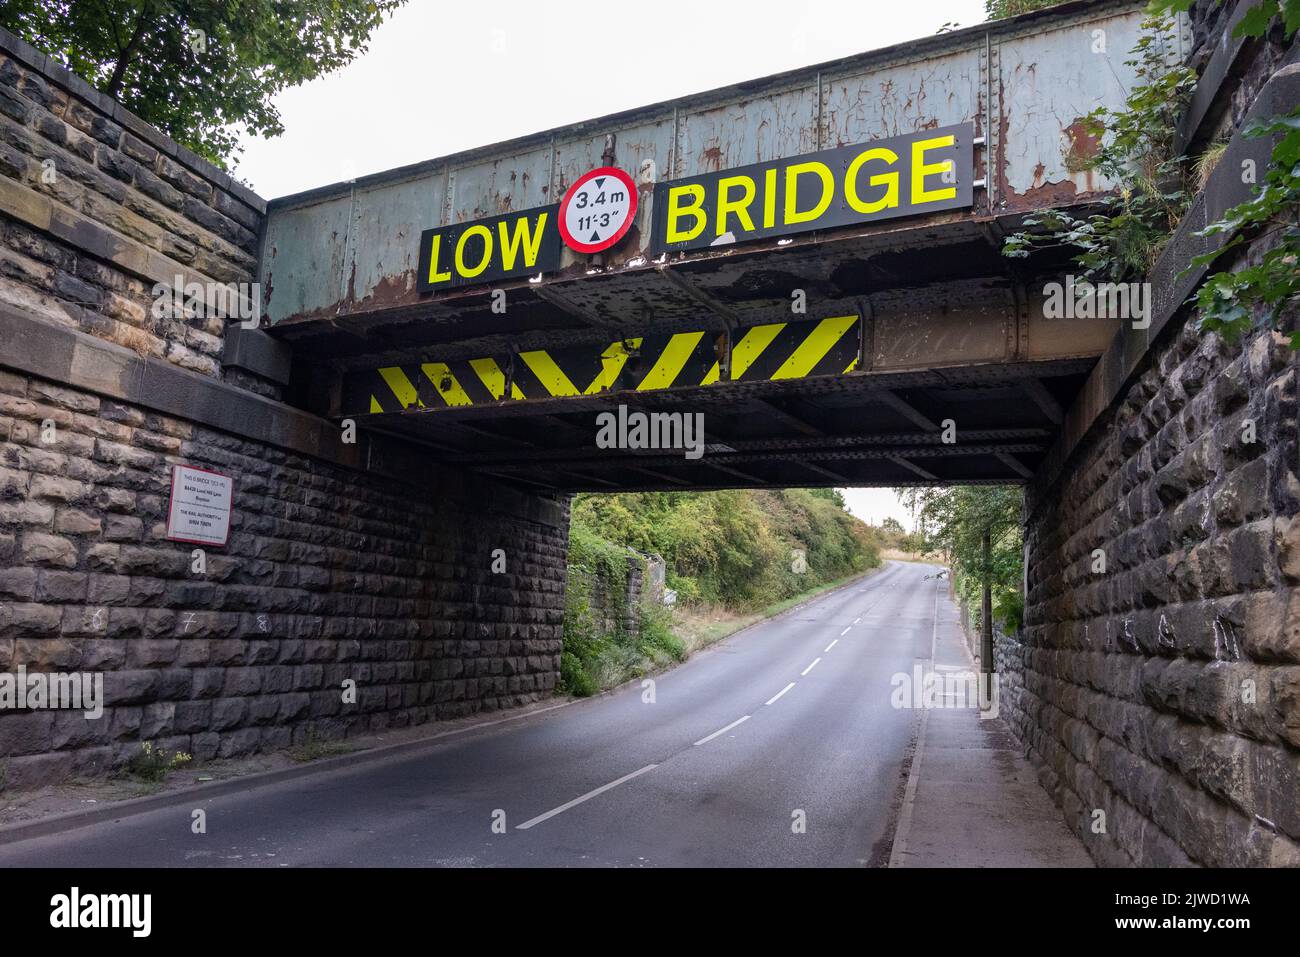 Low bridge warning sign on a railway bridge, UK Stock Photo